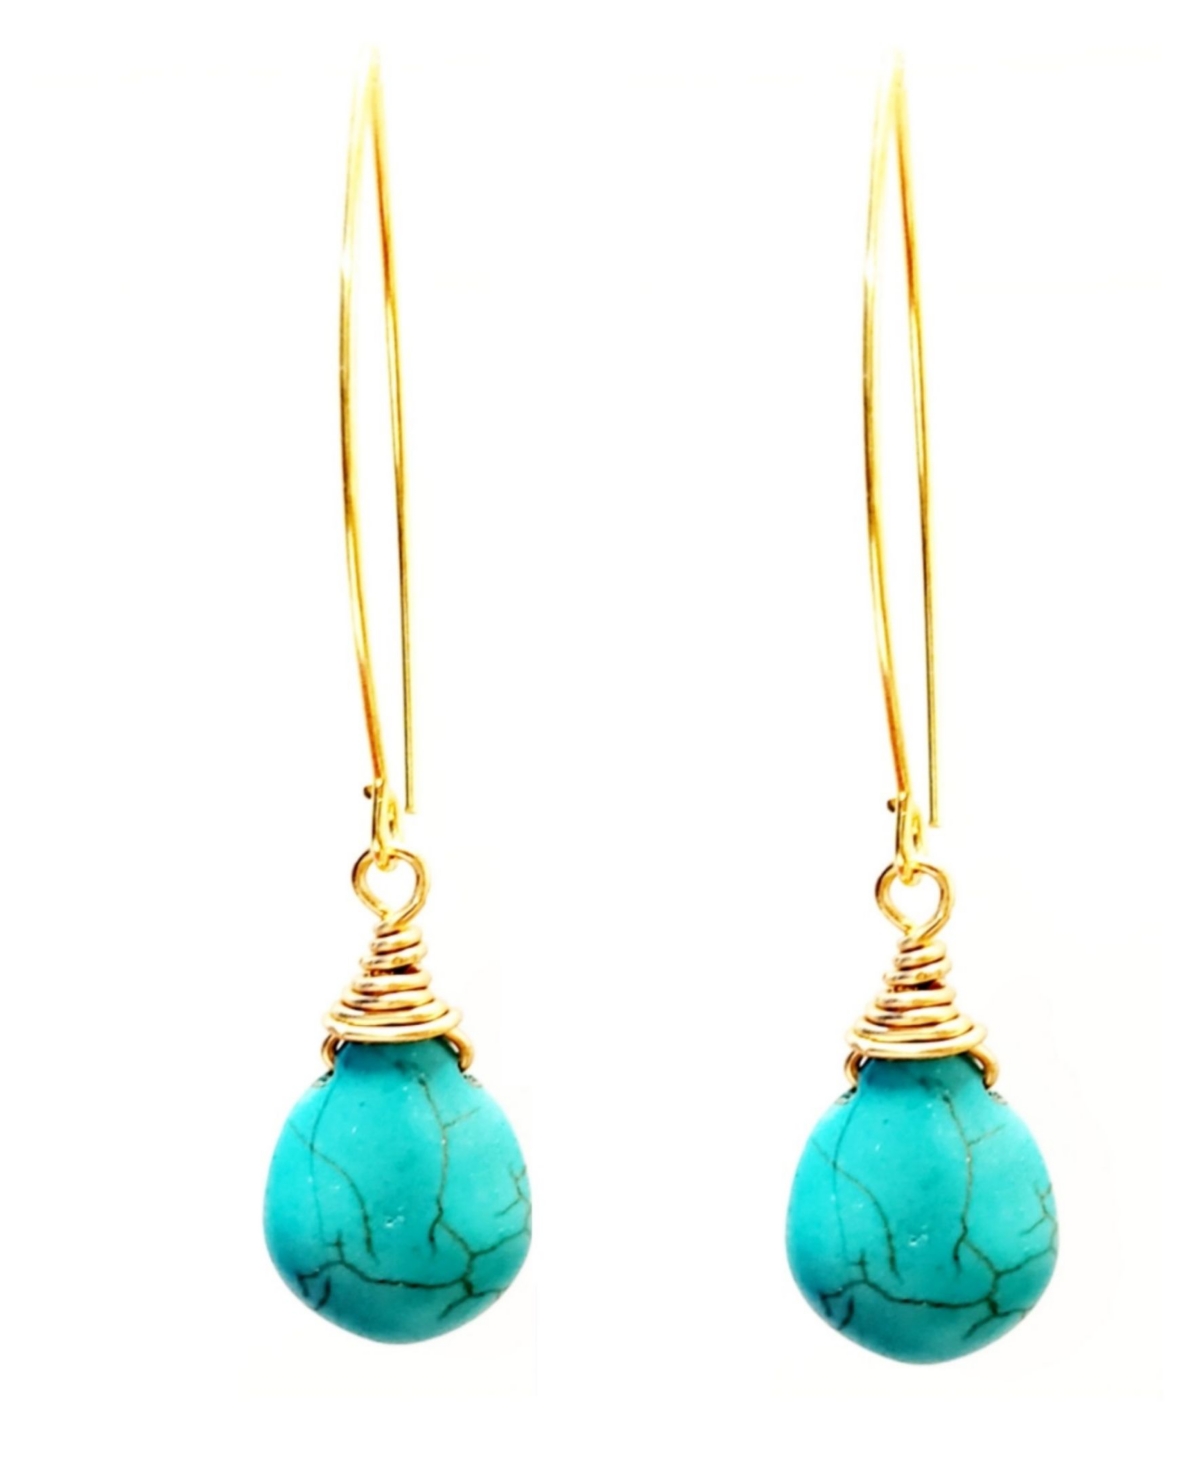 Turquoise Earrings - Turquoise